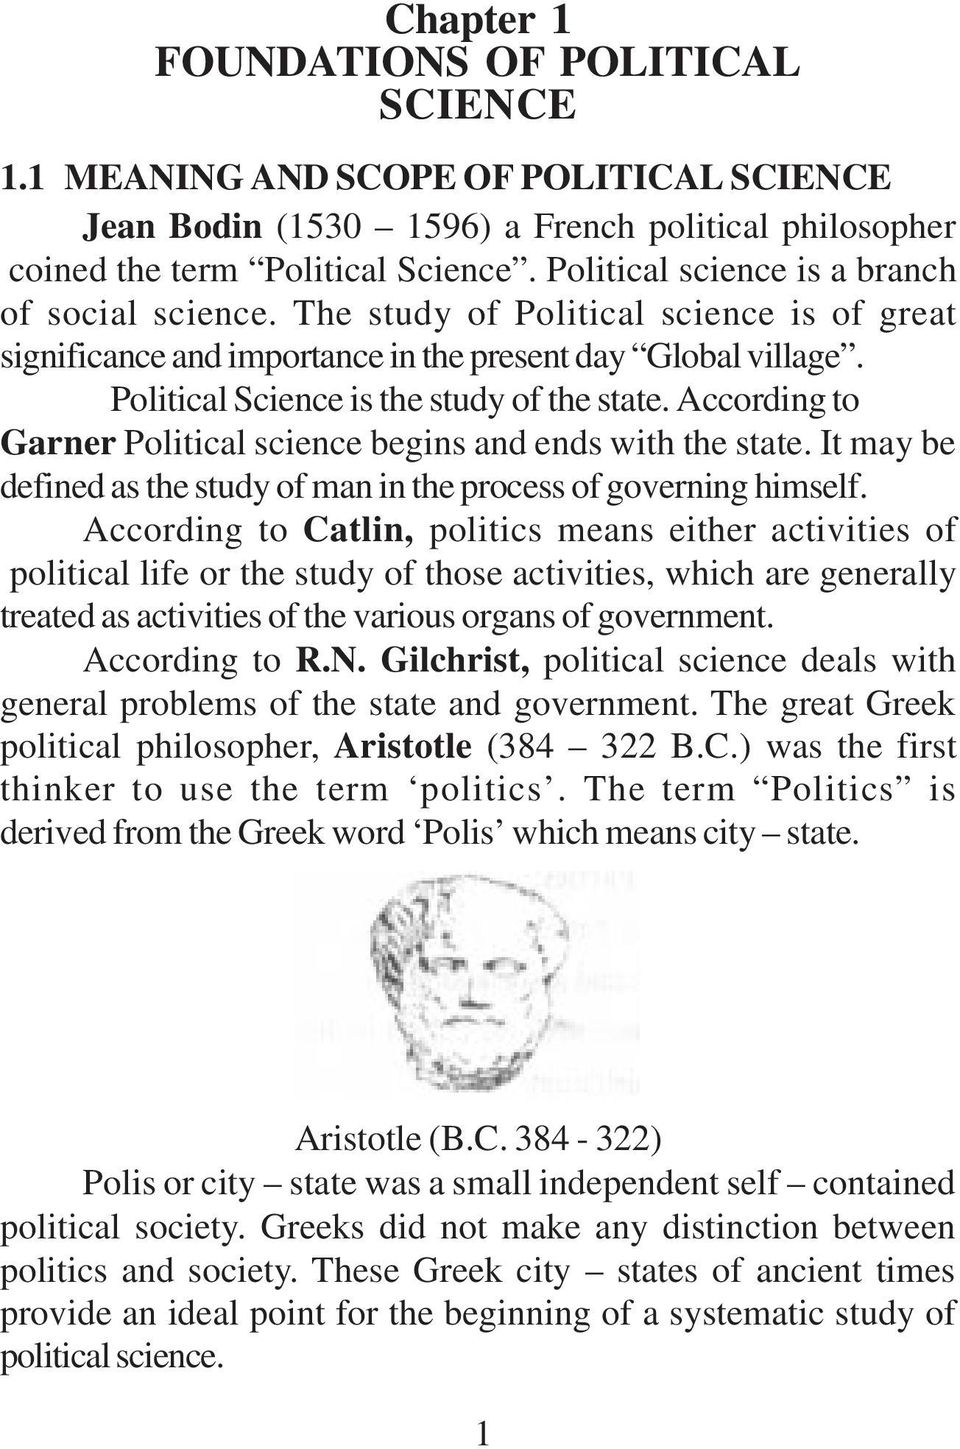 define state in political science